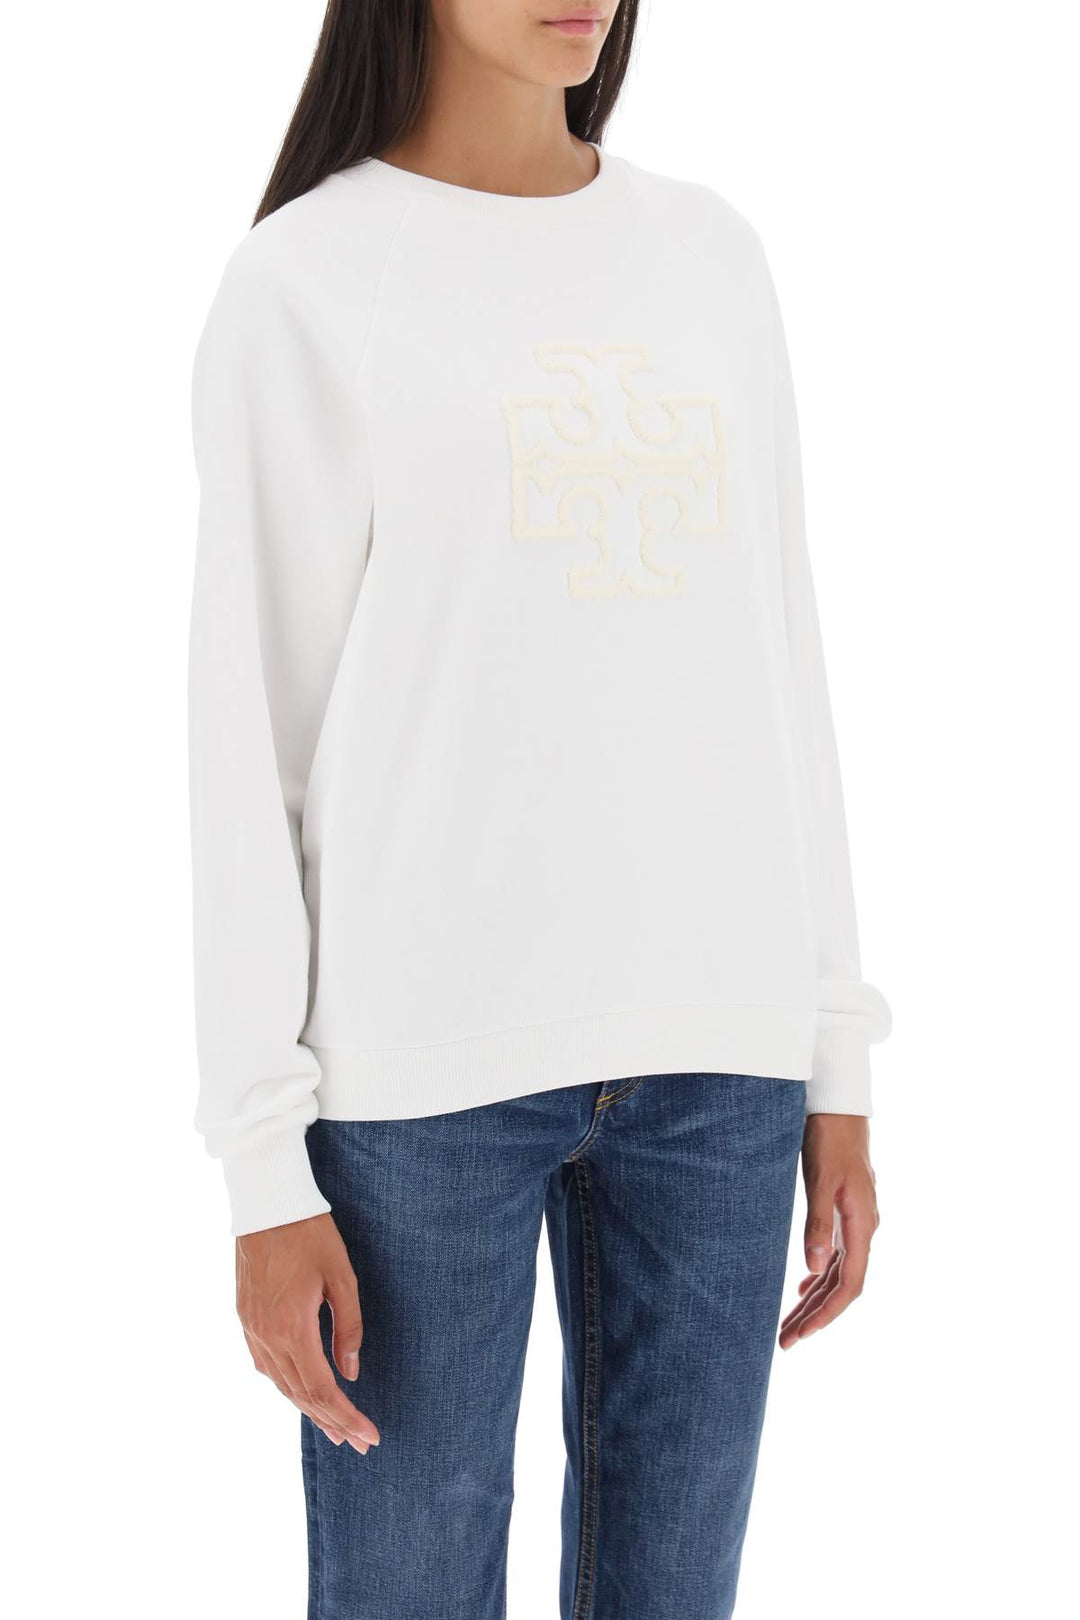 Tory Burch Crew Neck Sweatshirt With T Logo   Bianco